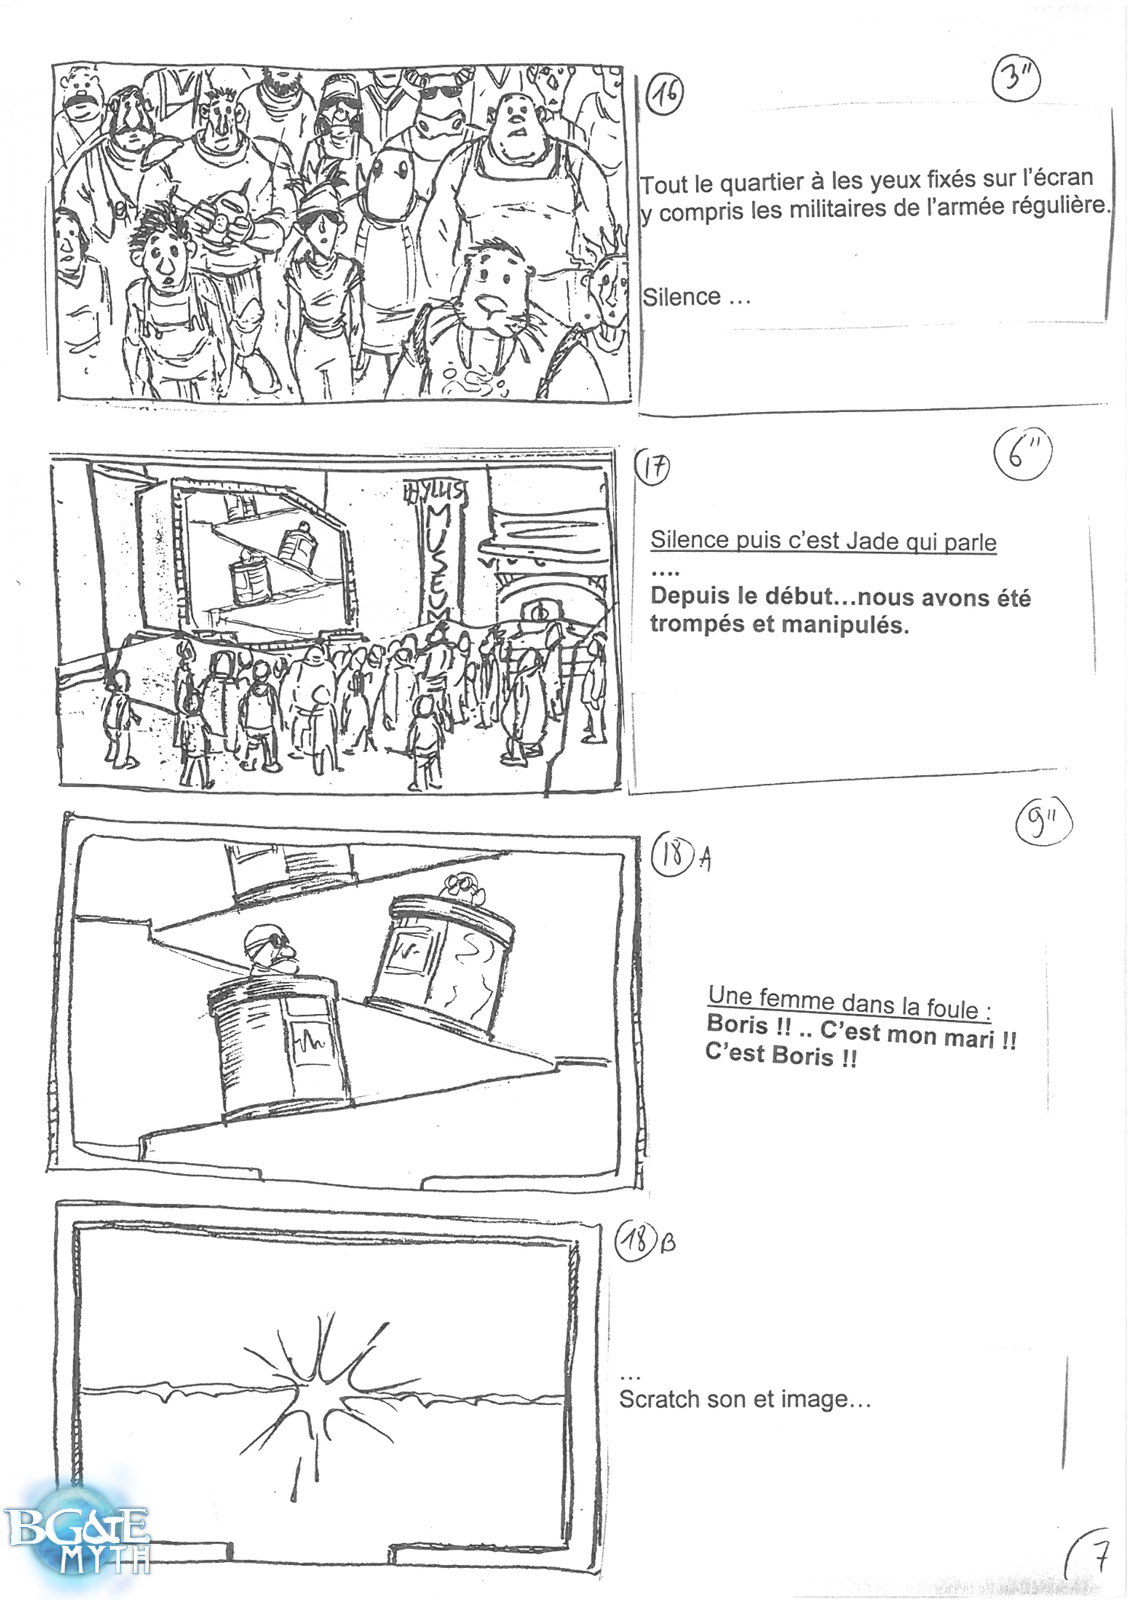 [Storyboard] Diffusion du reportage - Page 14